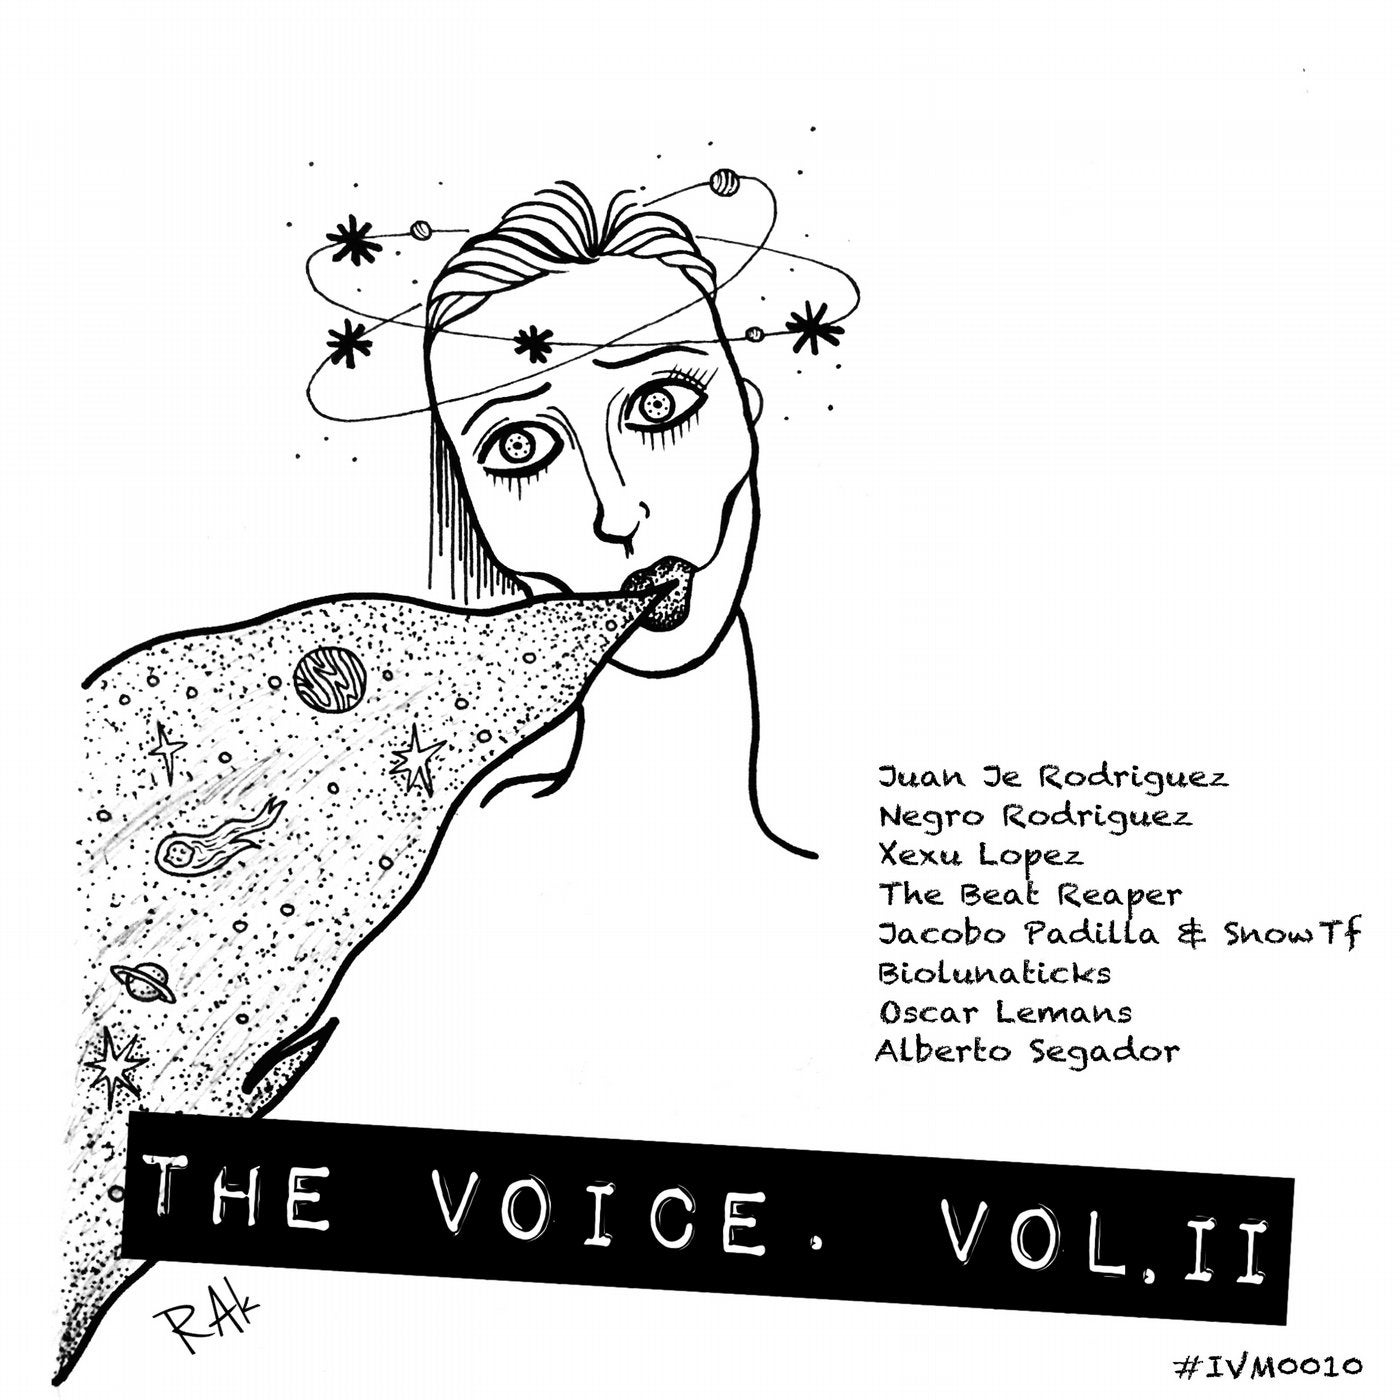 The Voice, Vol. 2